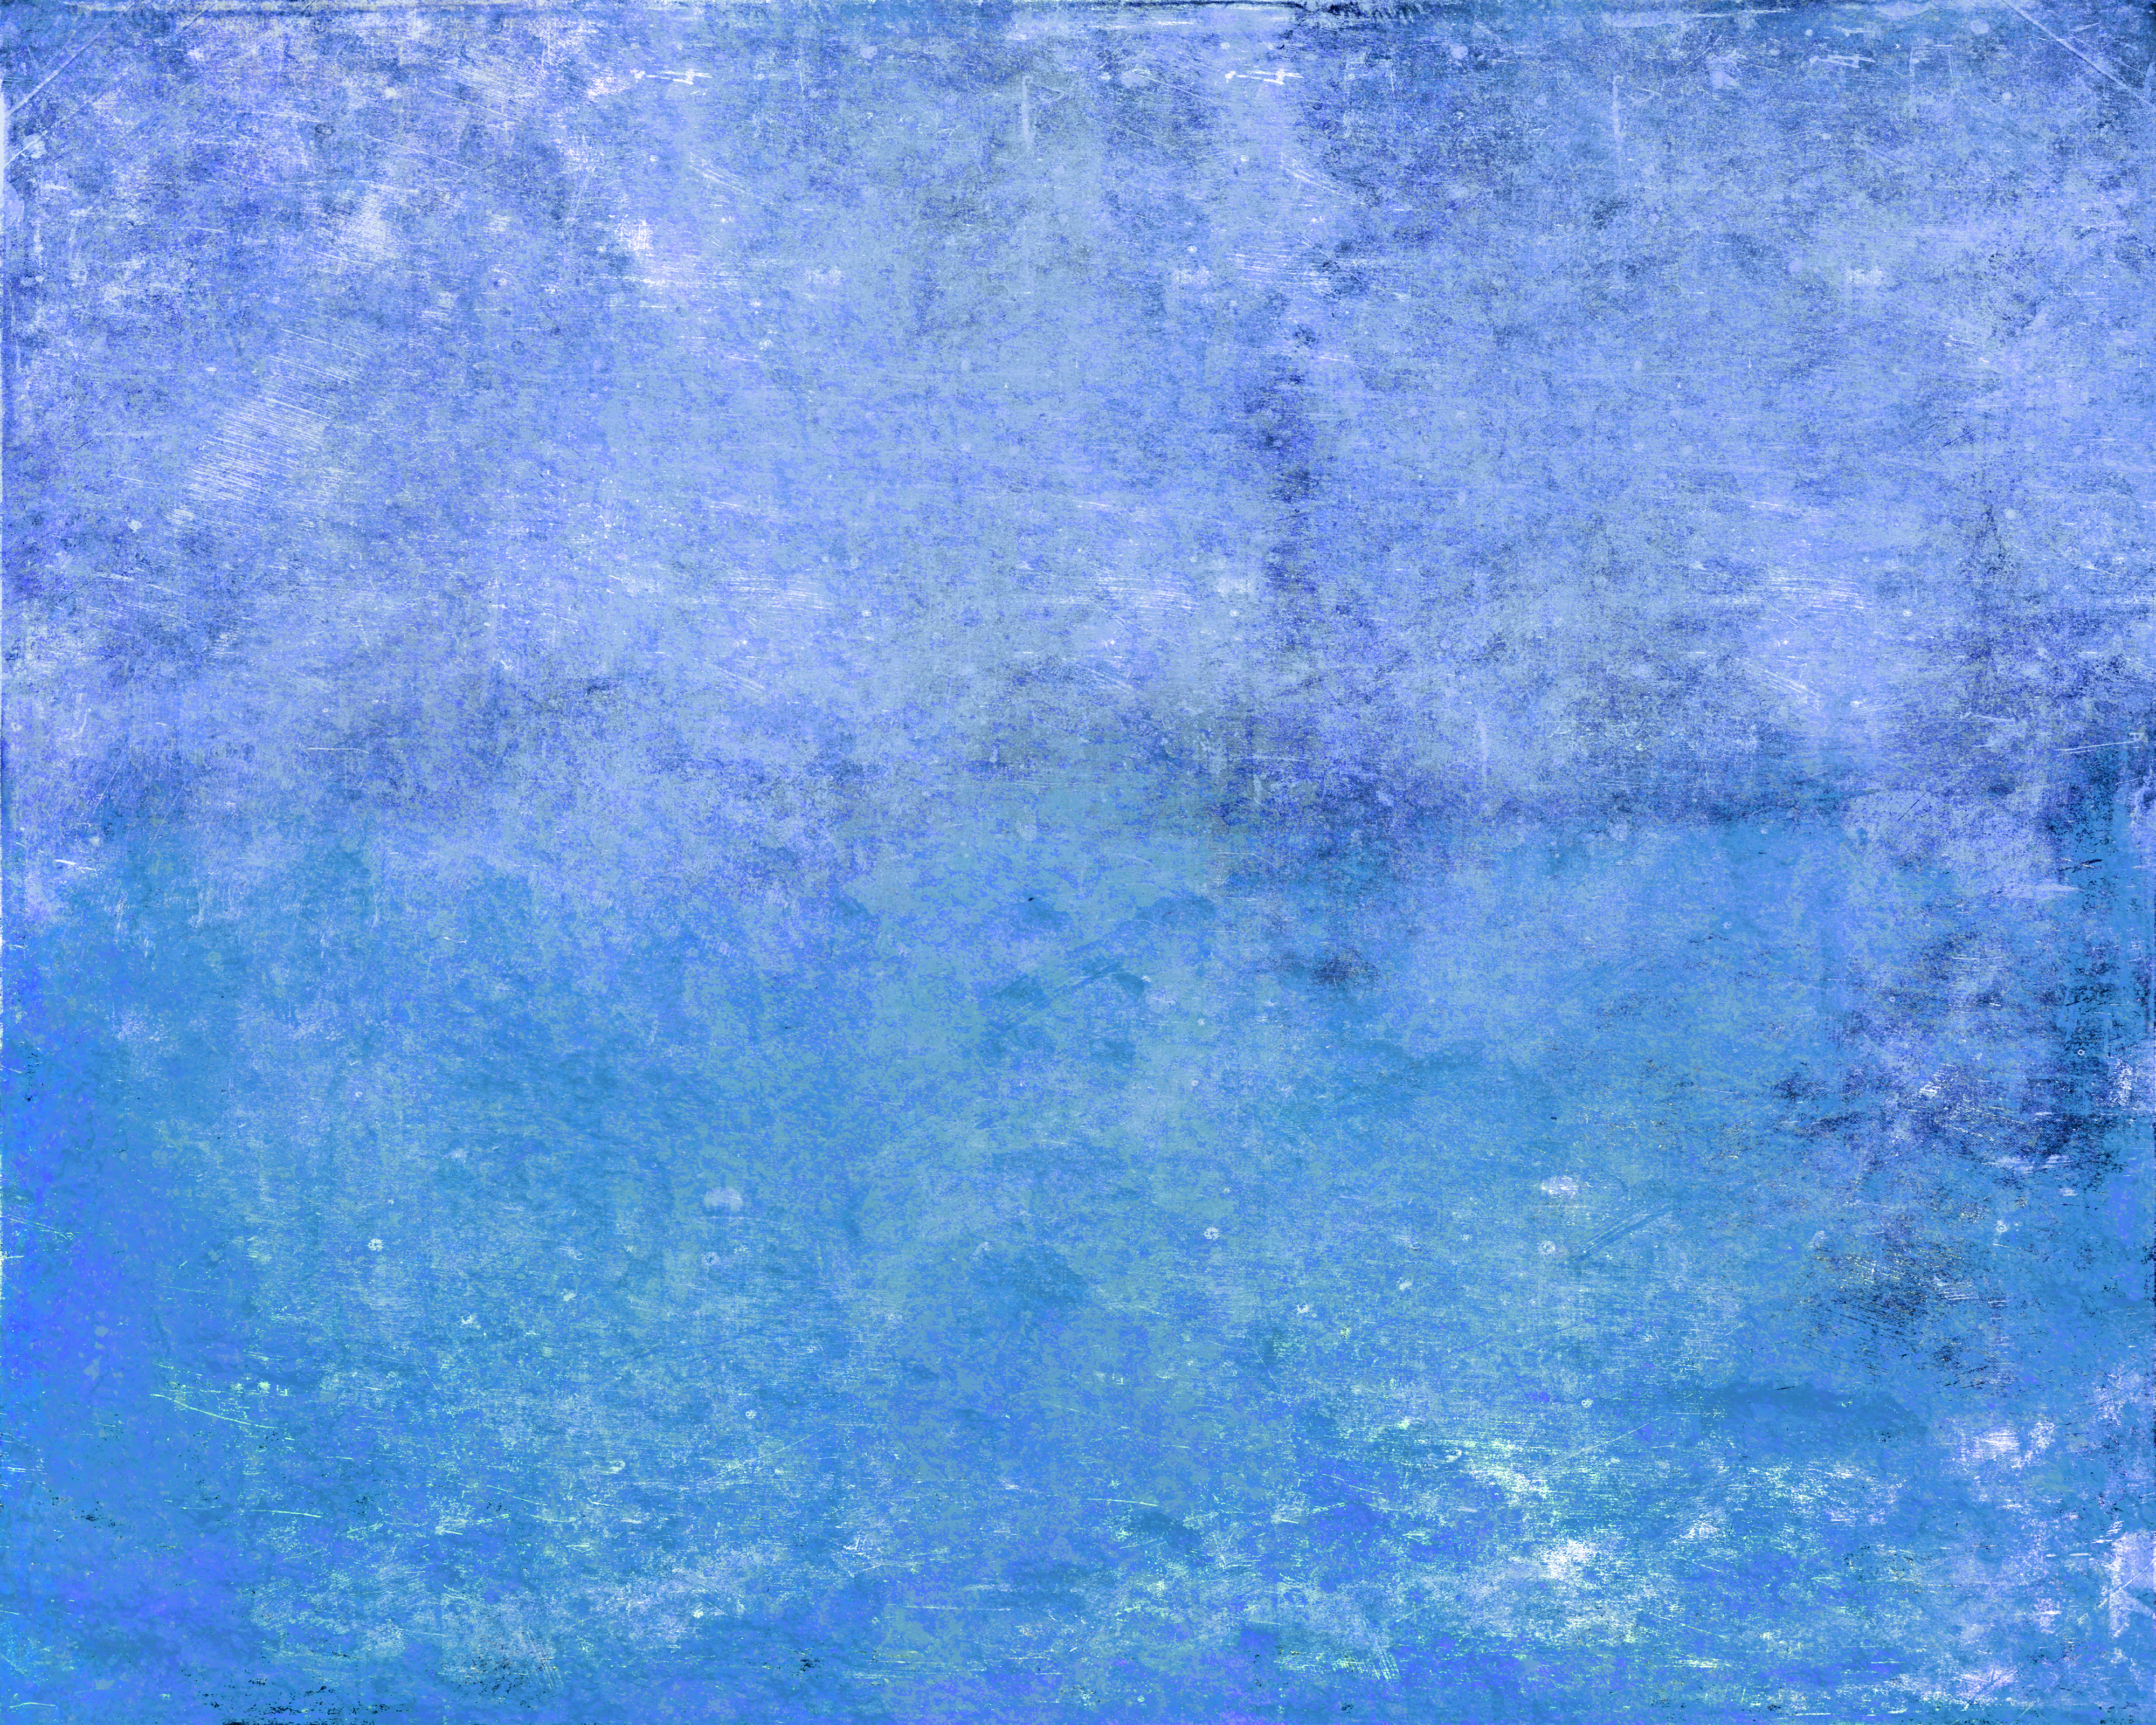 Origin Murals Grunge Distressed Effect Blue Wall Mural - 3.5 x 2.8m